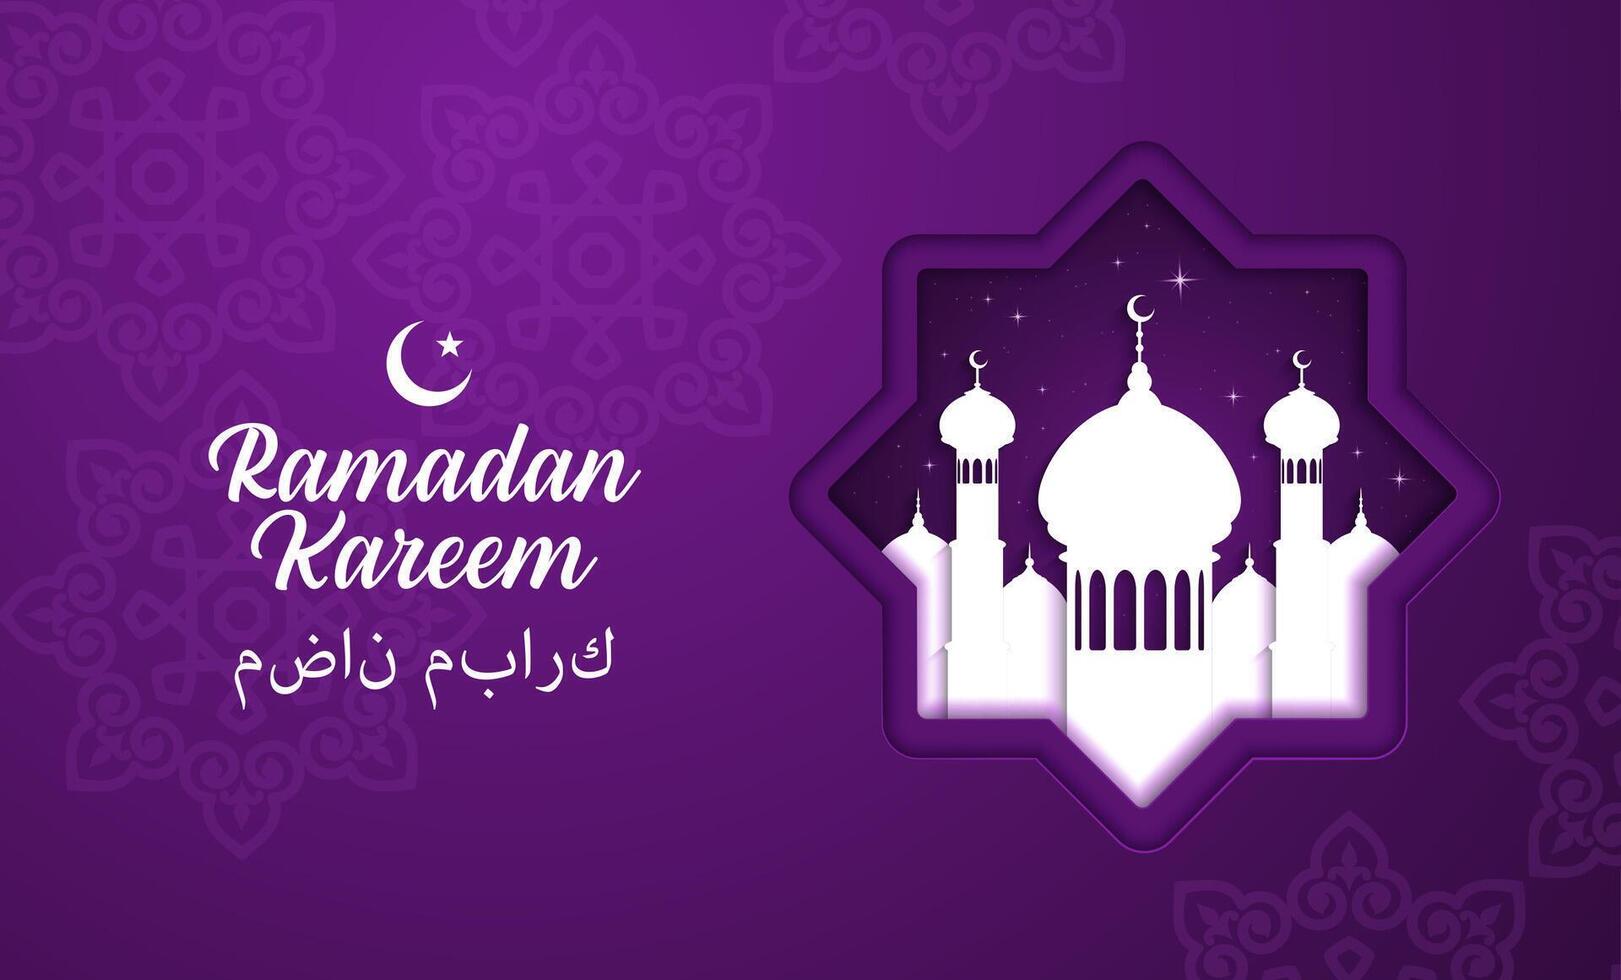 Ramadan Kareem paper cut banner with Muslim mosque vector